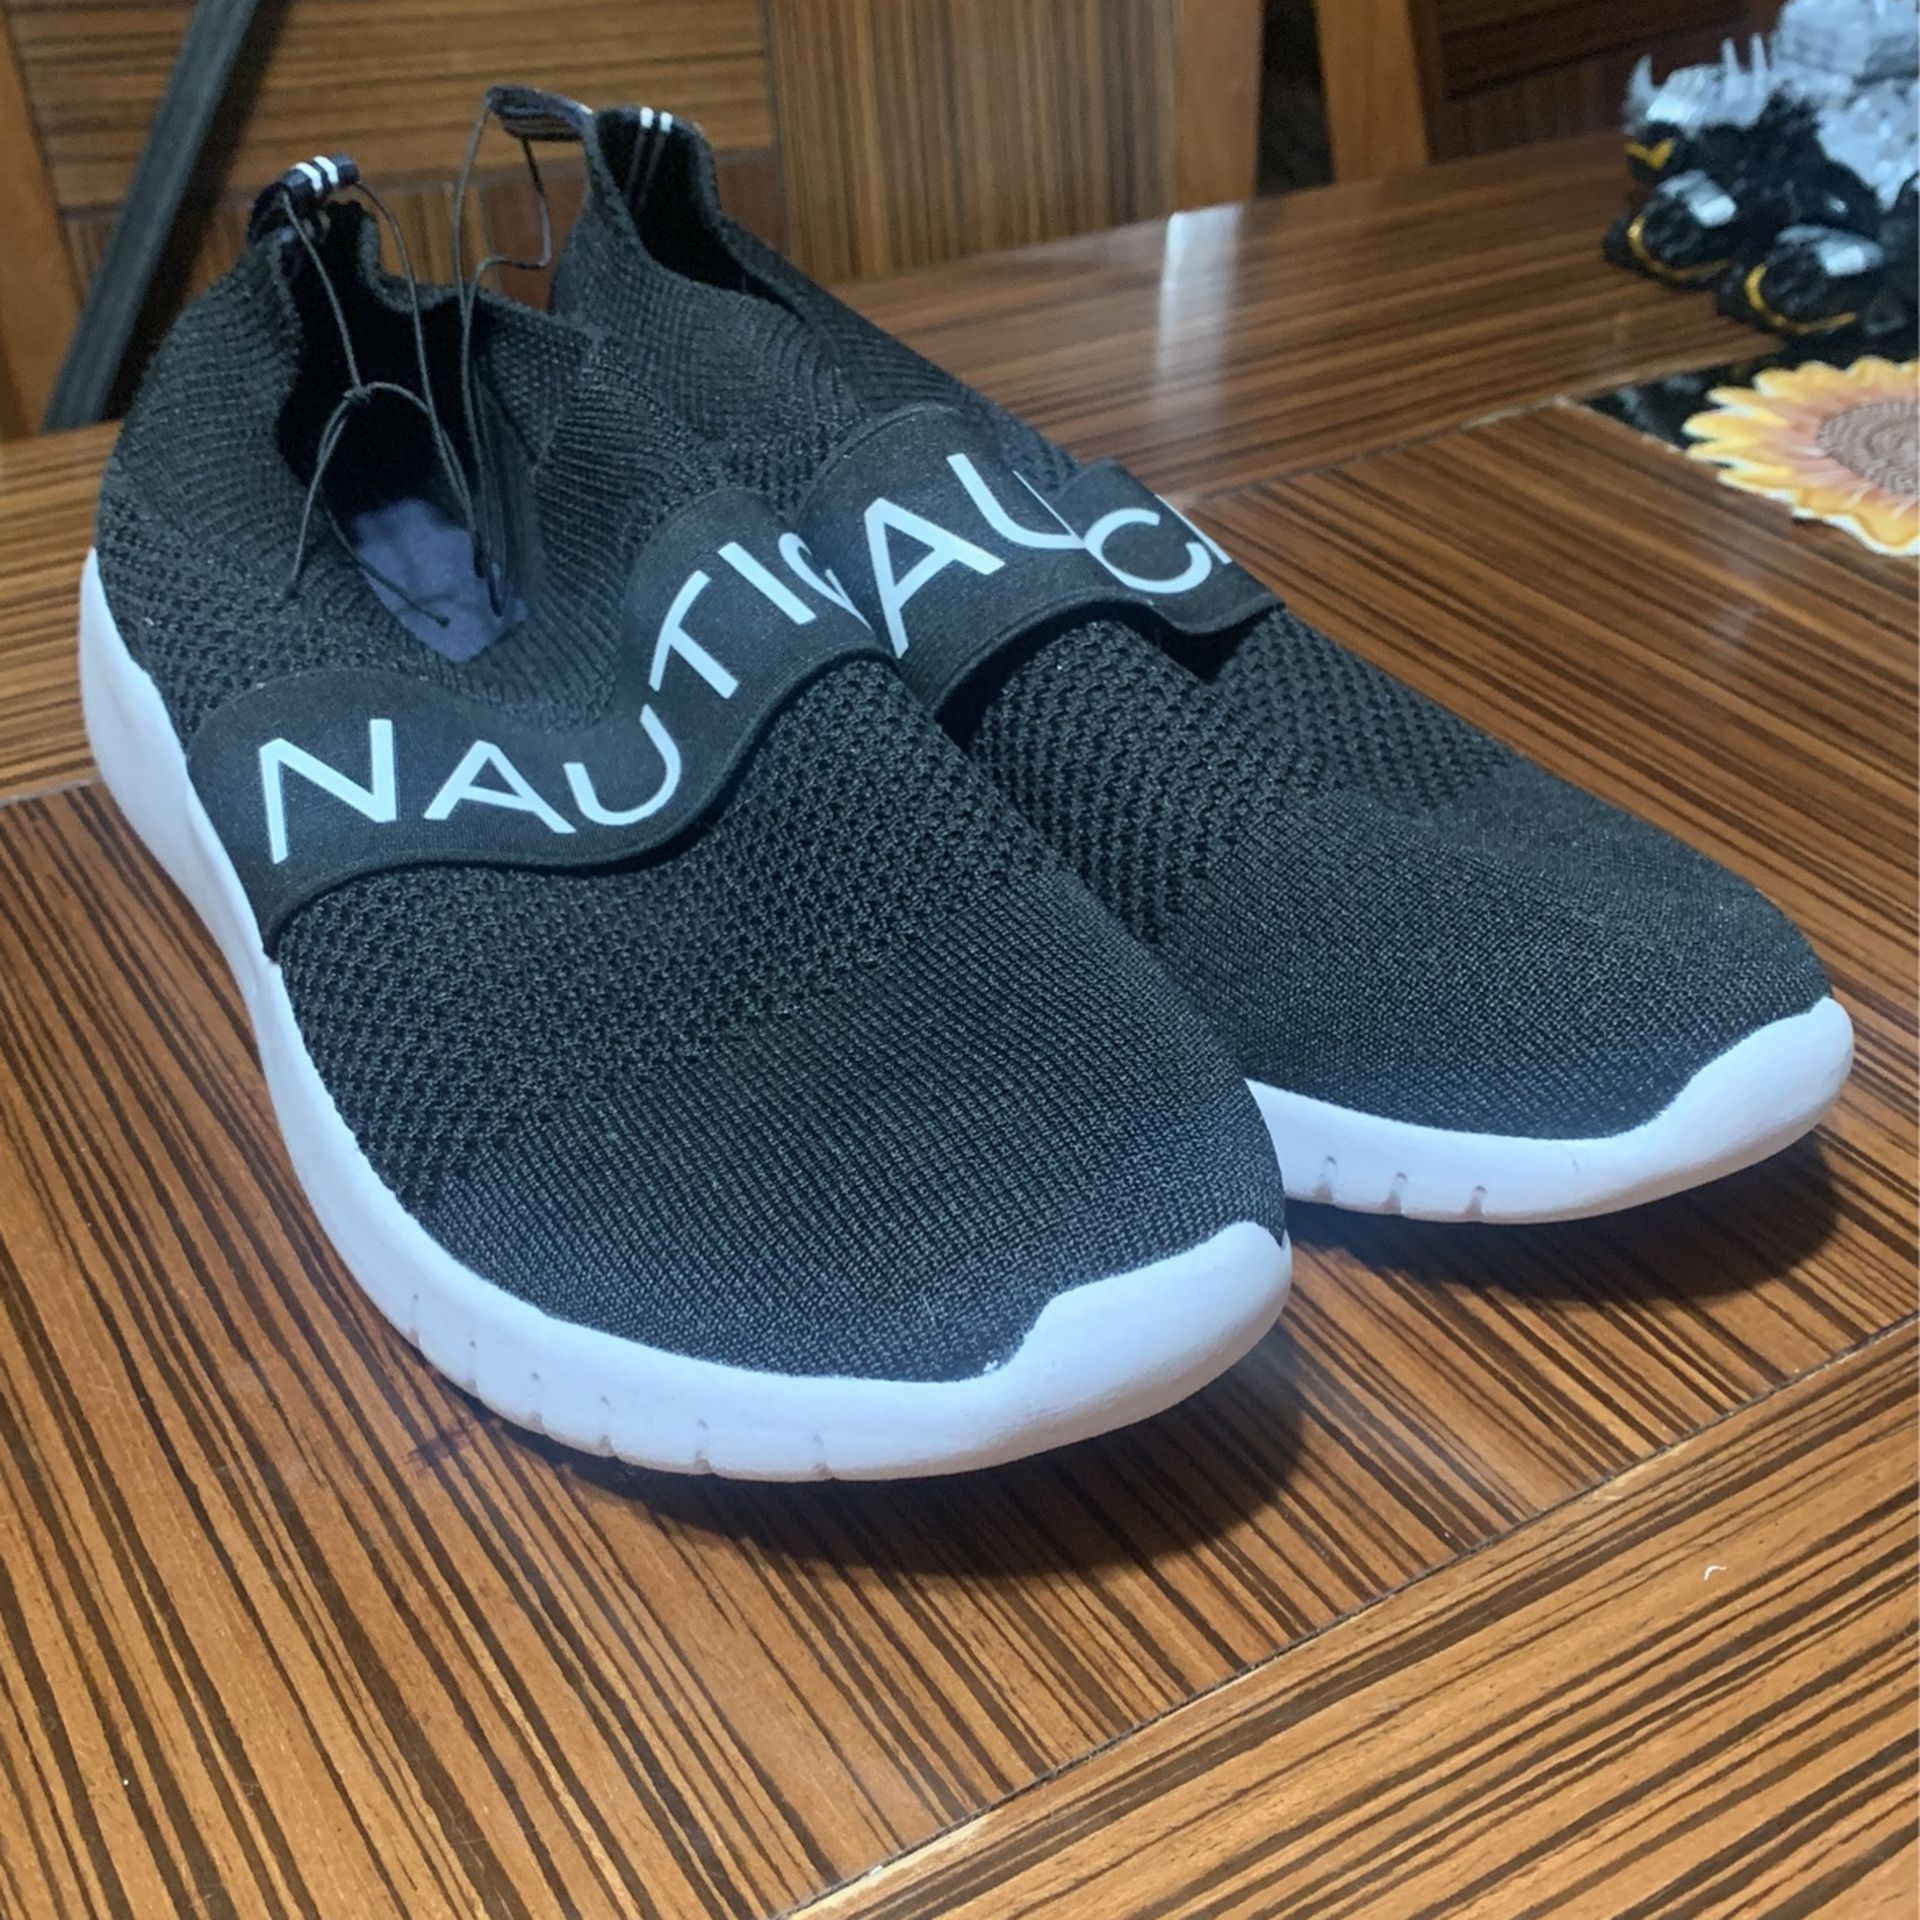 Nautica Slip On Shoes